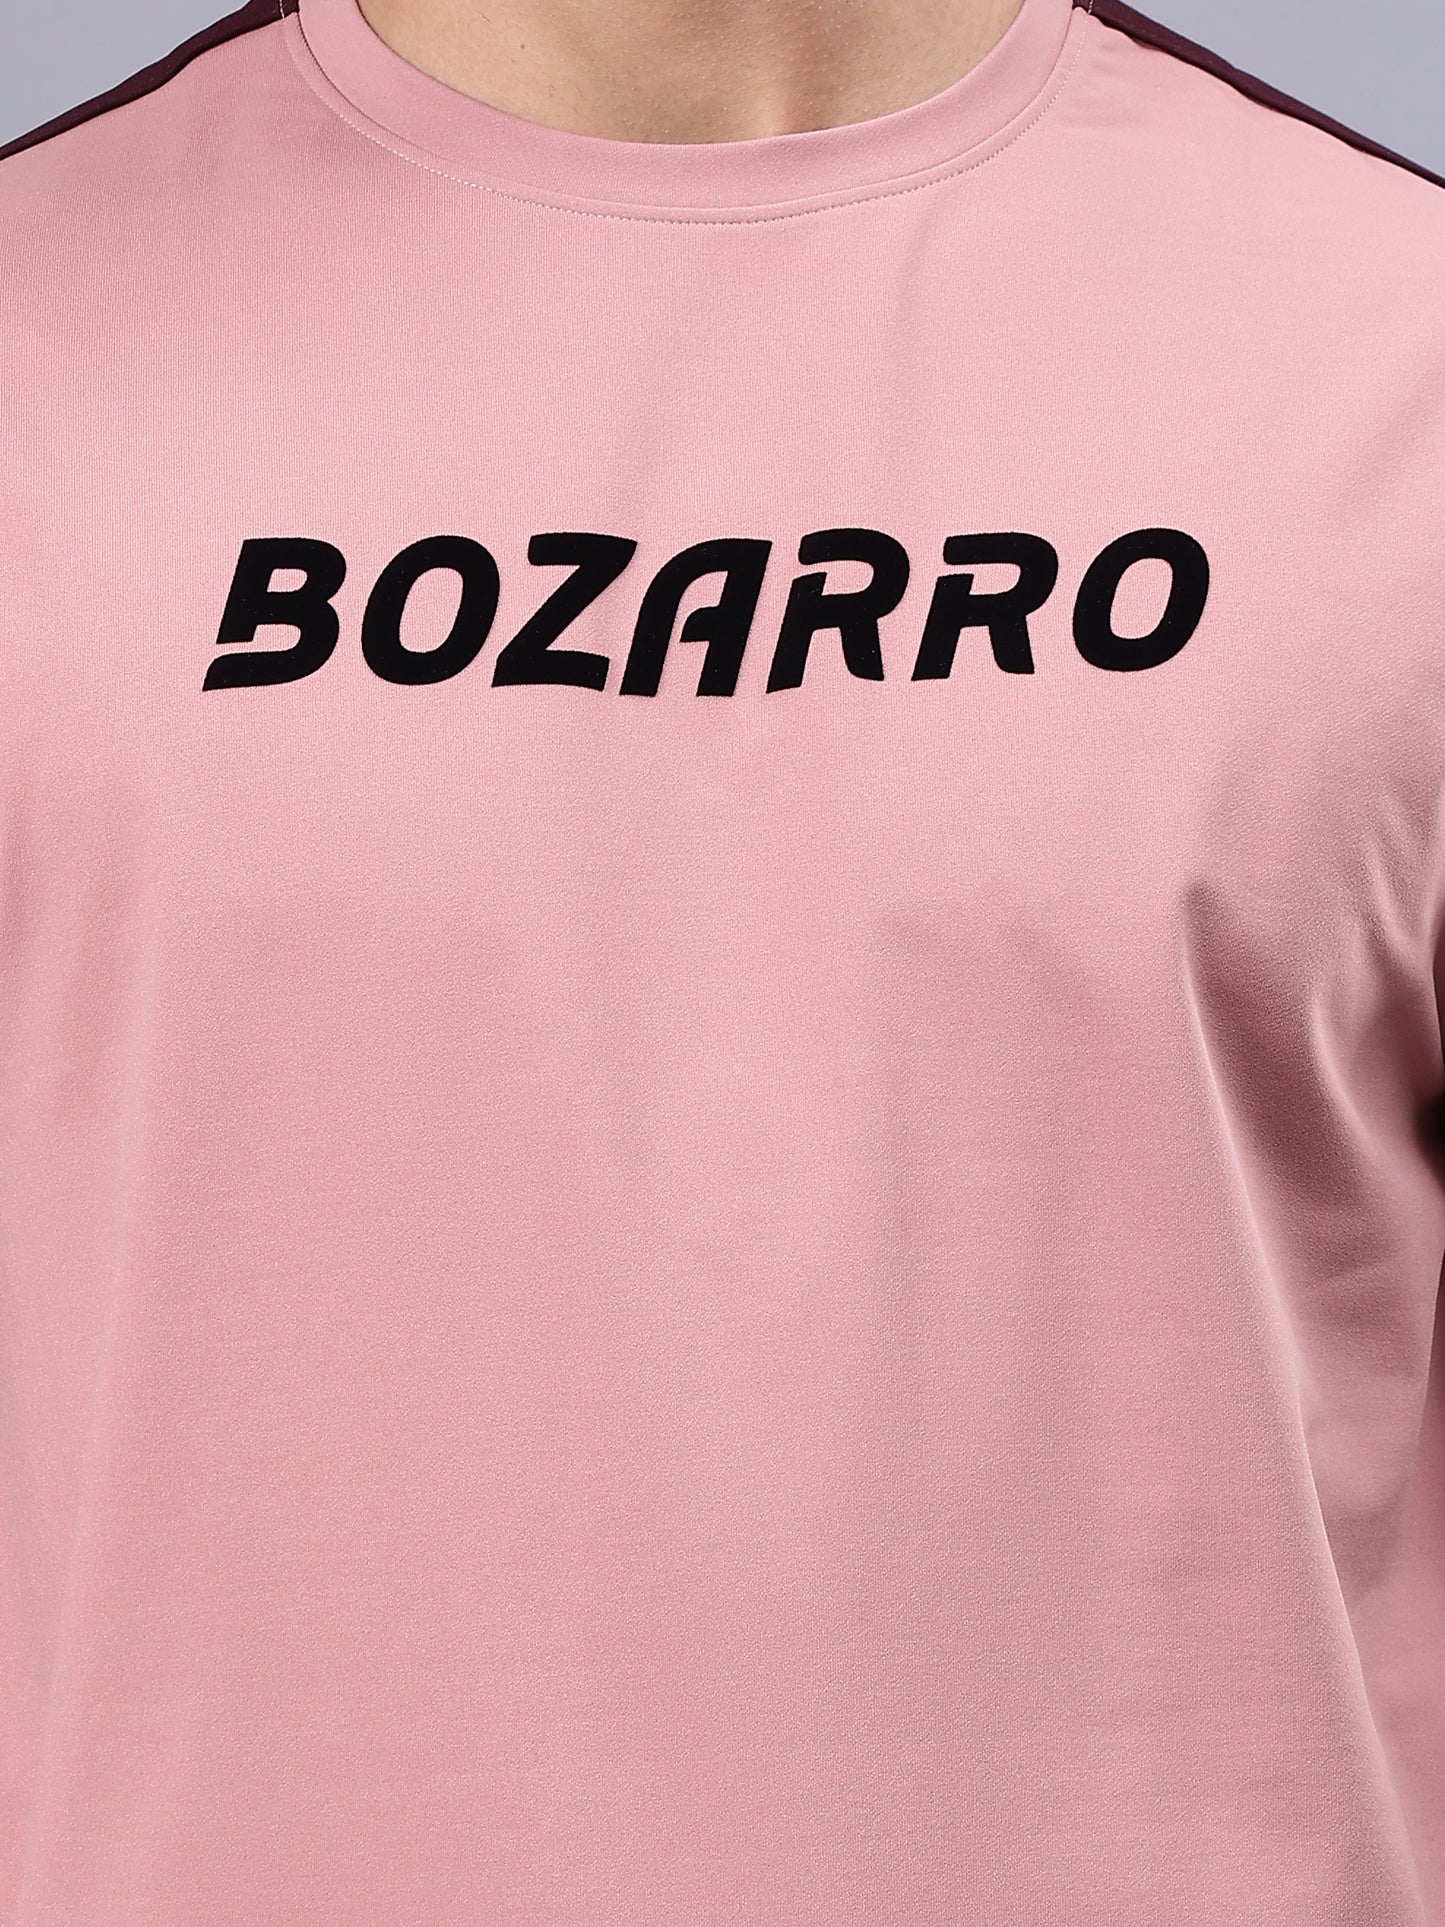 Round neck Oversized t shirt-light pink